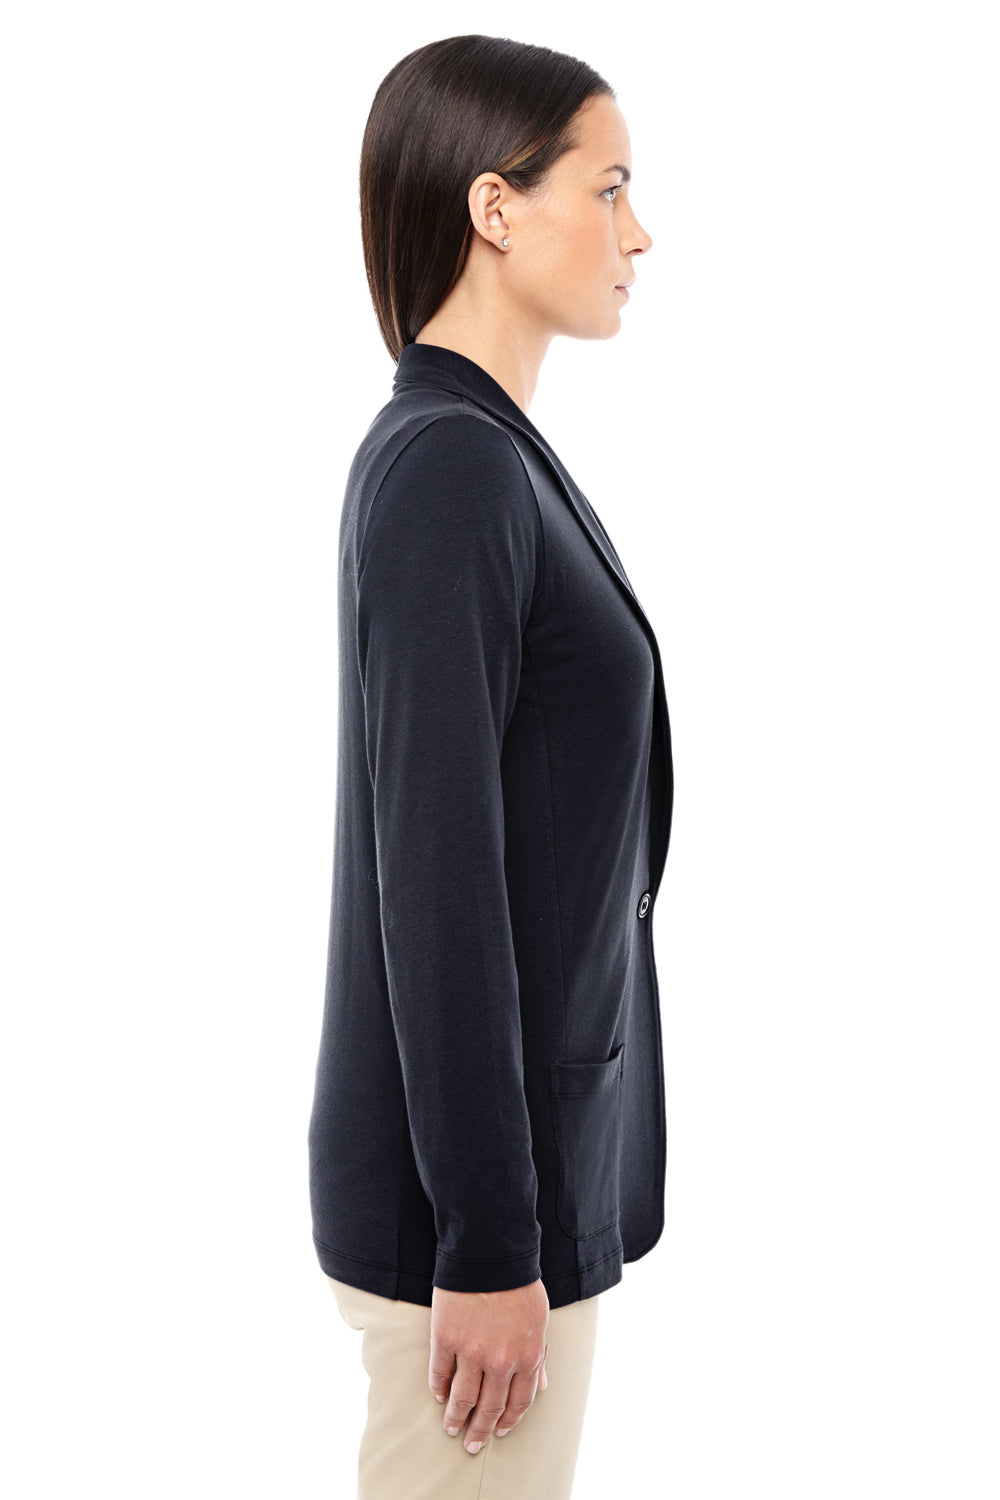 Devon & Jones DP462W Womens Perfect Fit Cardigan Sweater Black Side